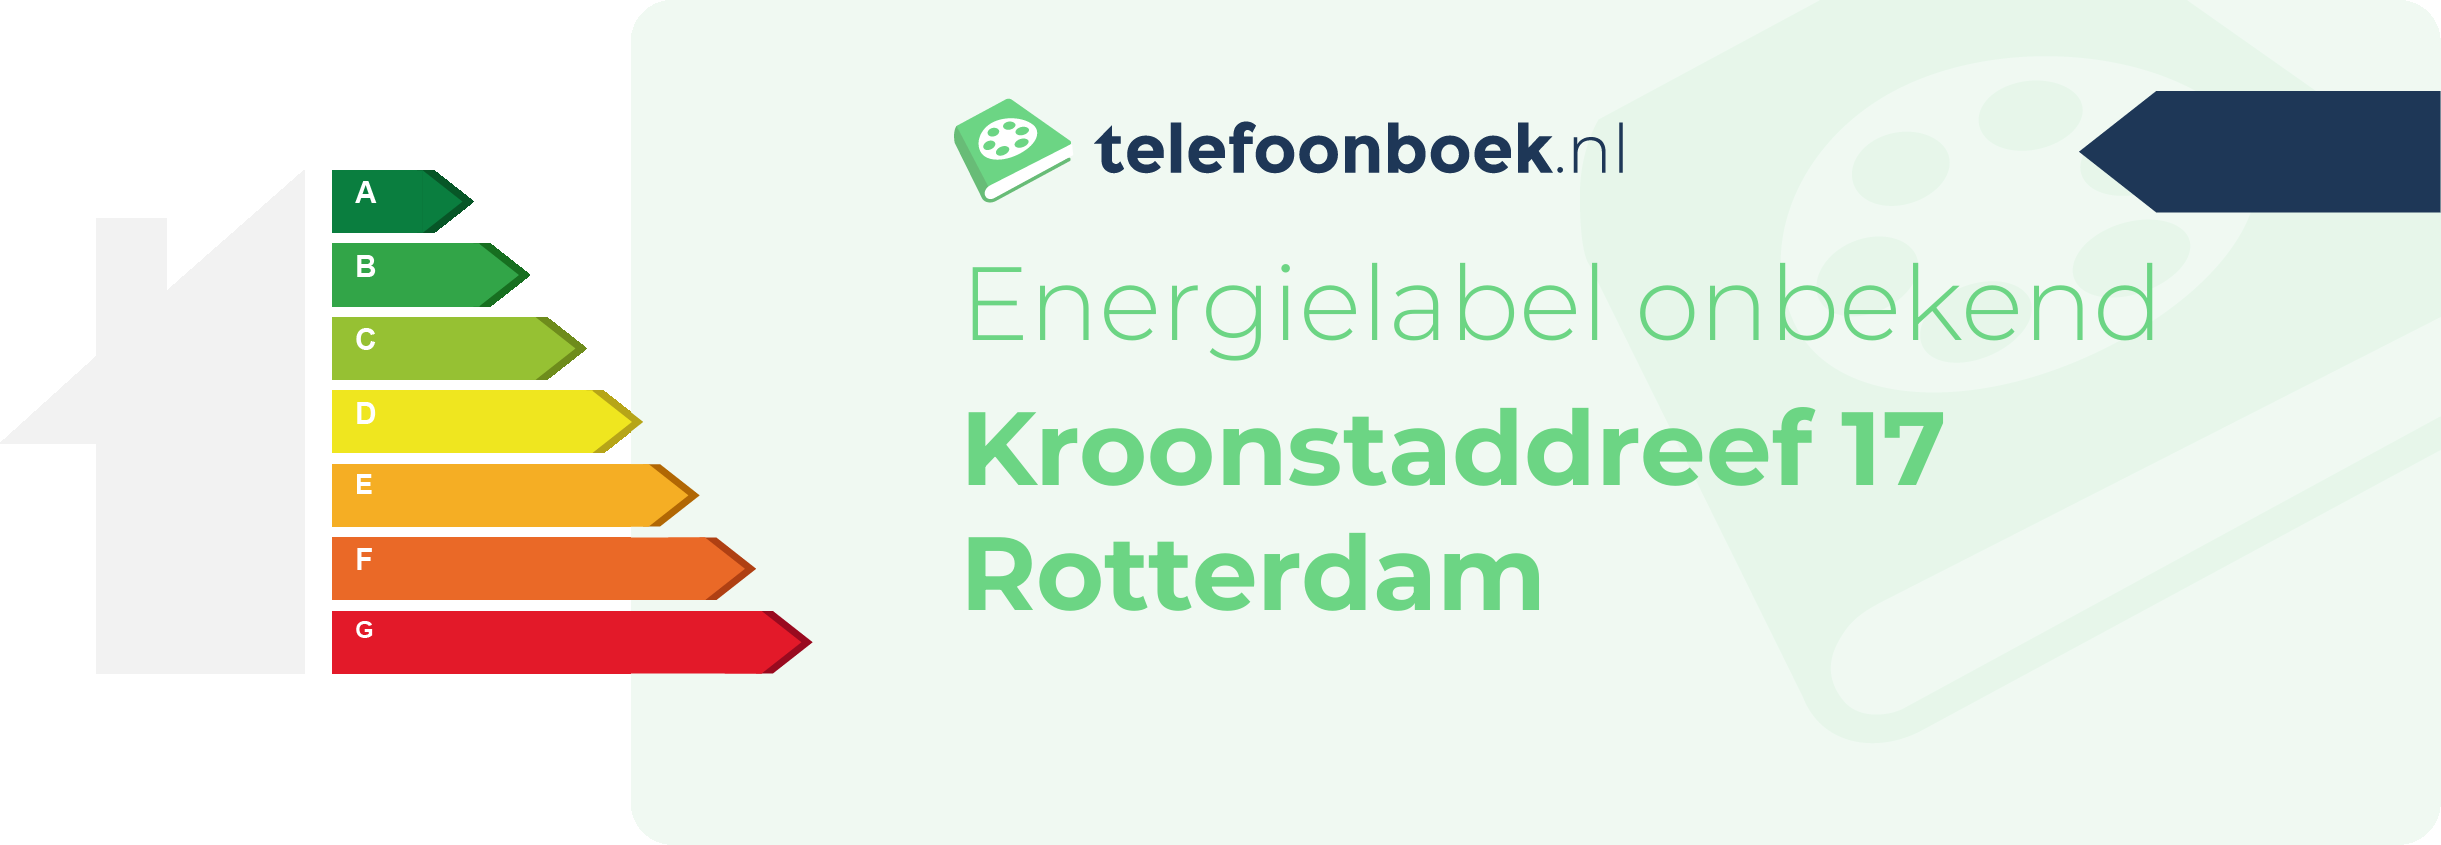 Energielabel Kroonstaddreef 17 Rotterdam